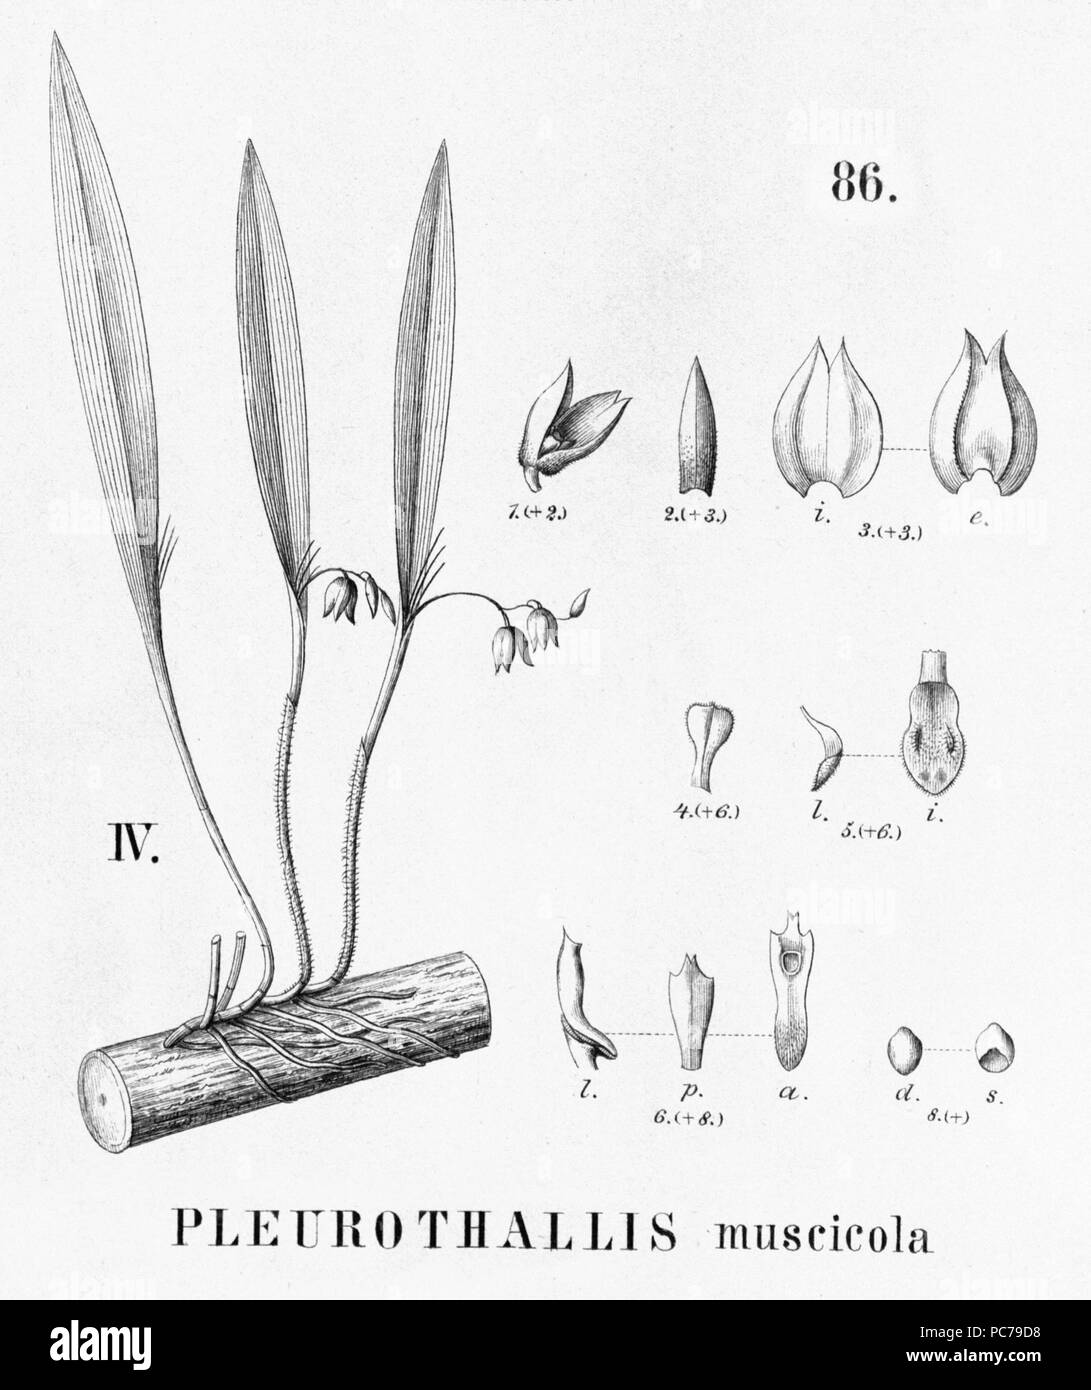 25 Acianthera muscicola (as Pleurothallis muscicola) - cutout from Flora Brasiliensis 3-4-86 fig IV Stock Photo